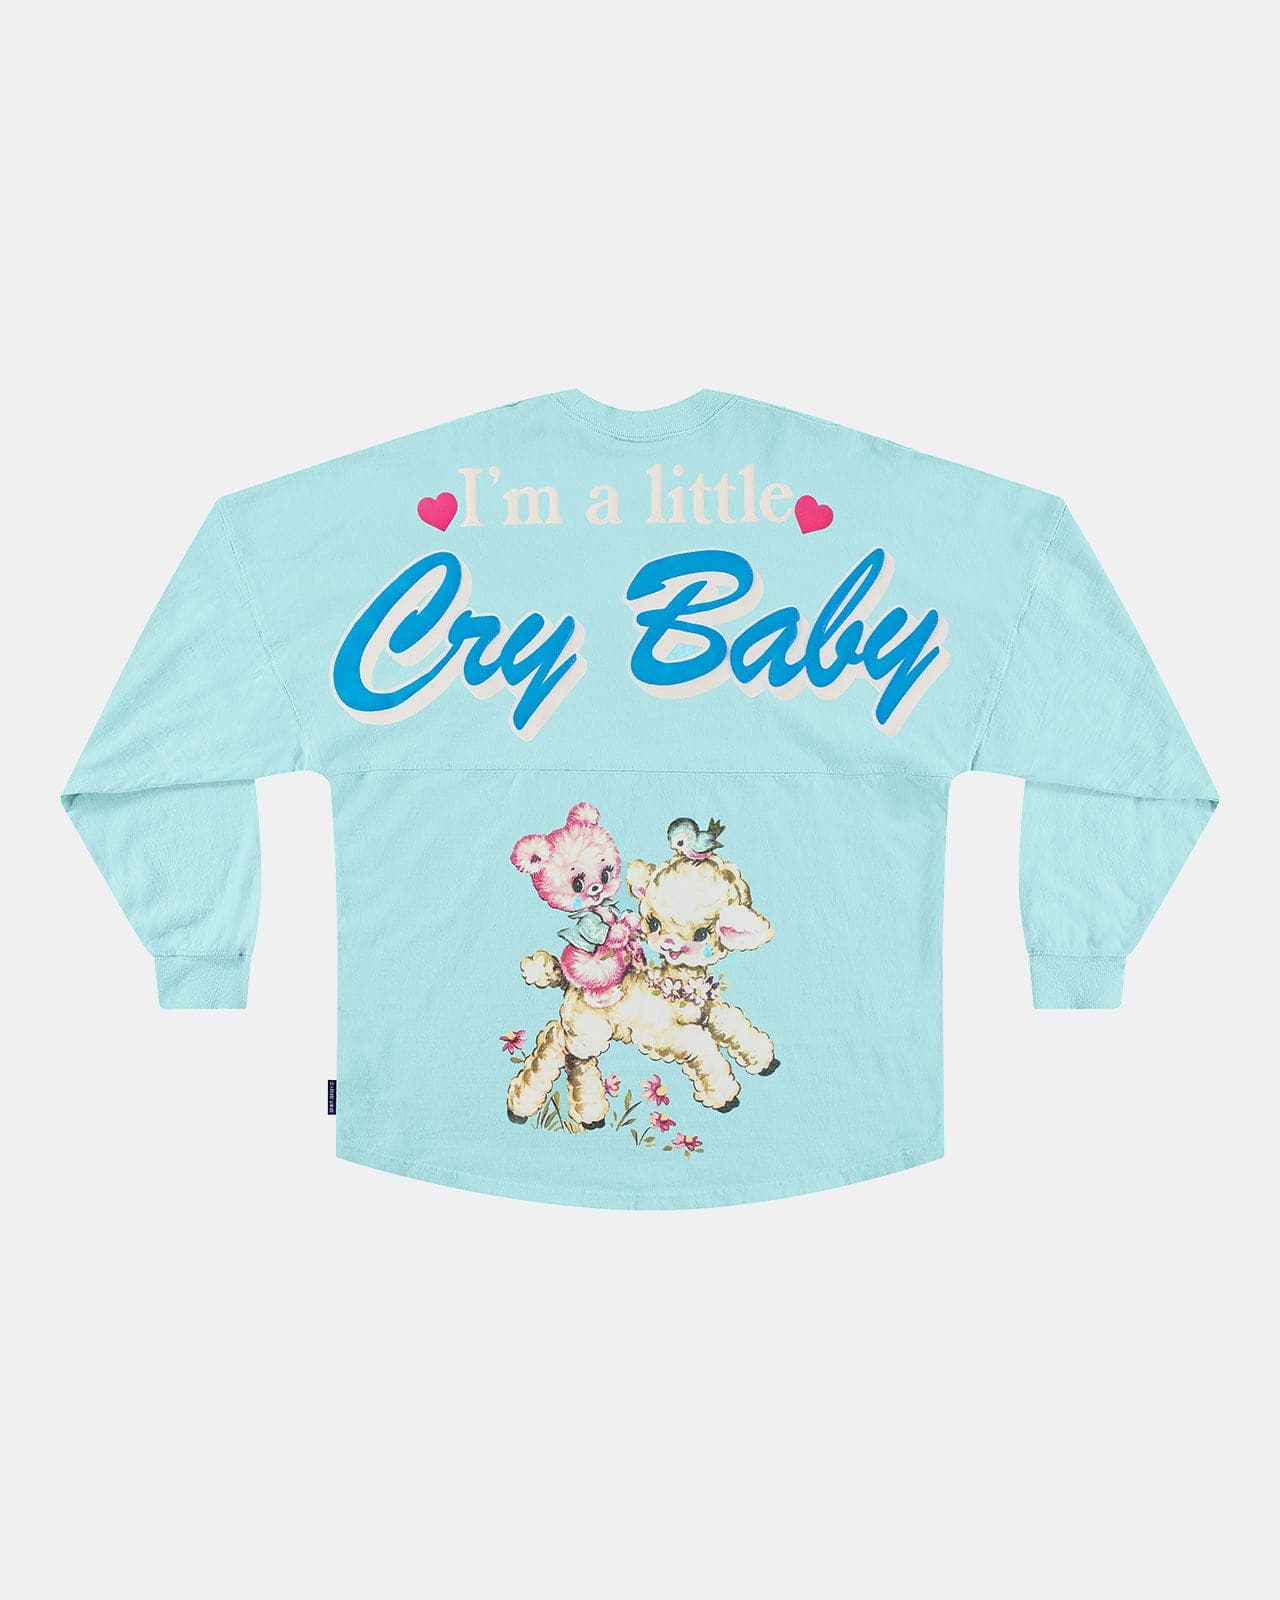 Cry Baby Spirit Jersey® - spiritjersey.com